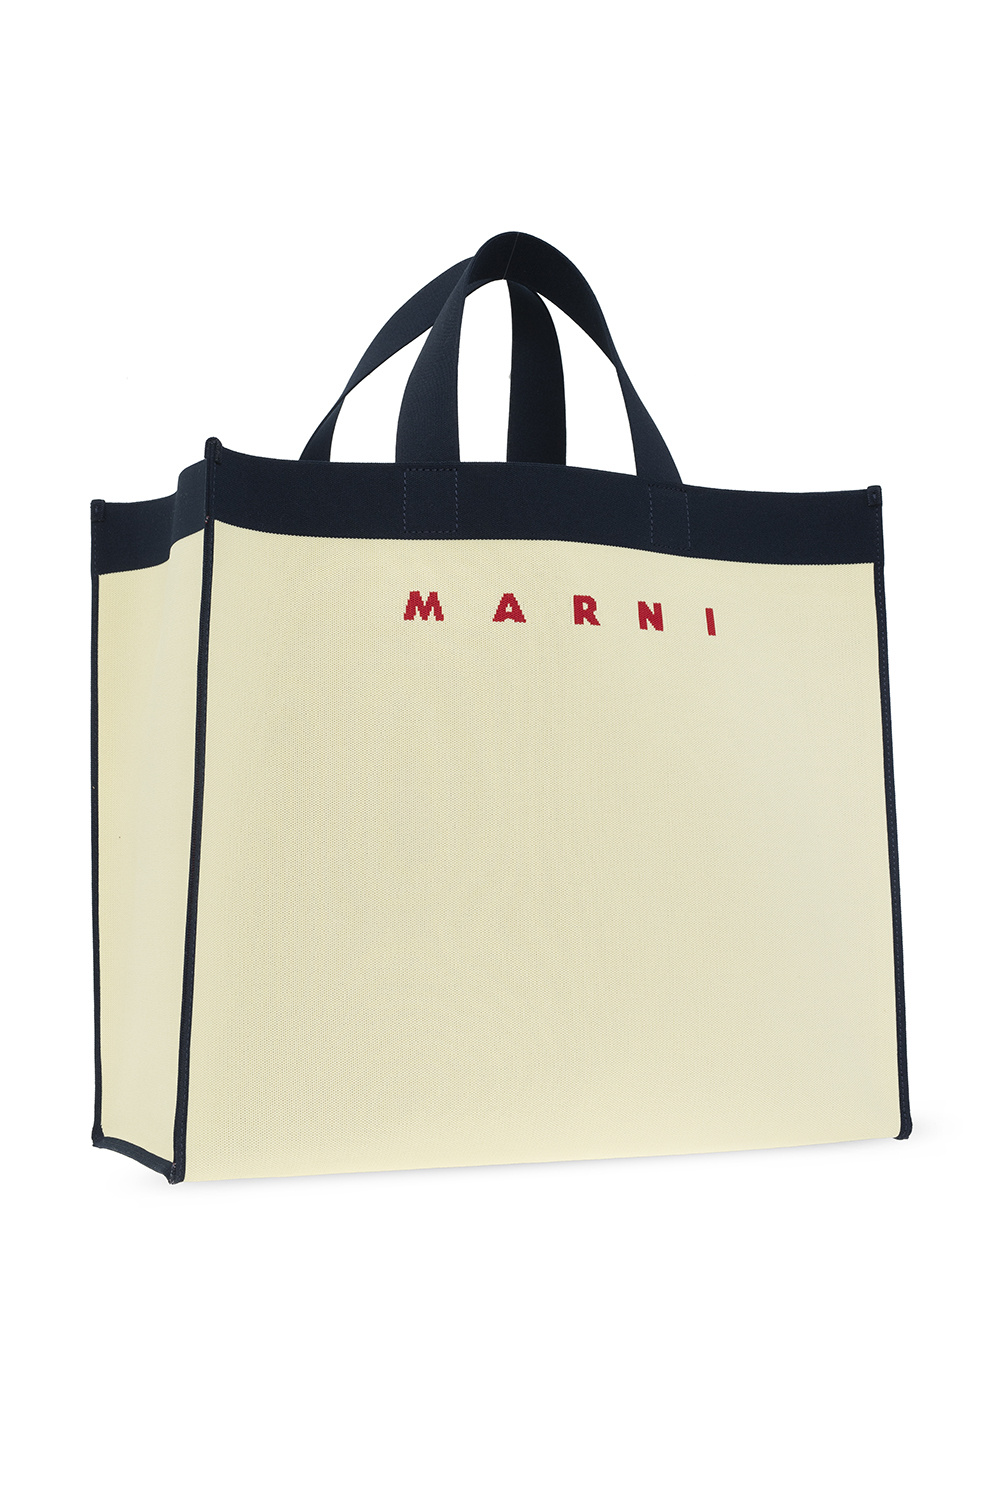 Marni Canvas shopper bag